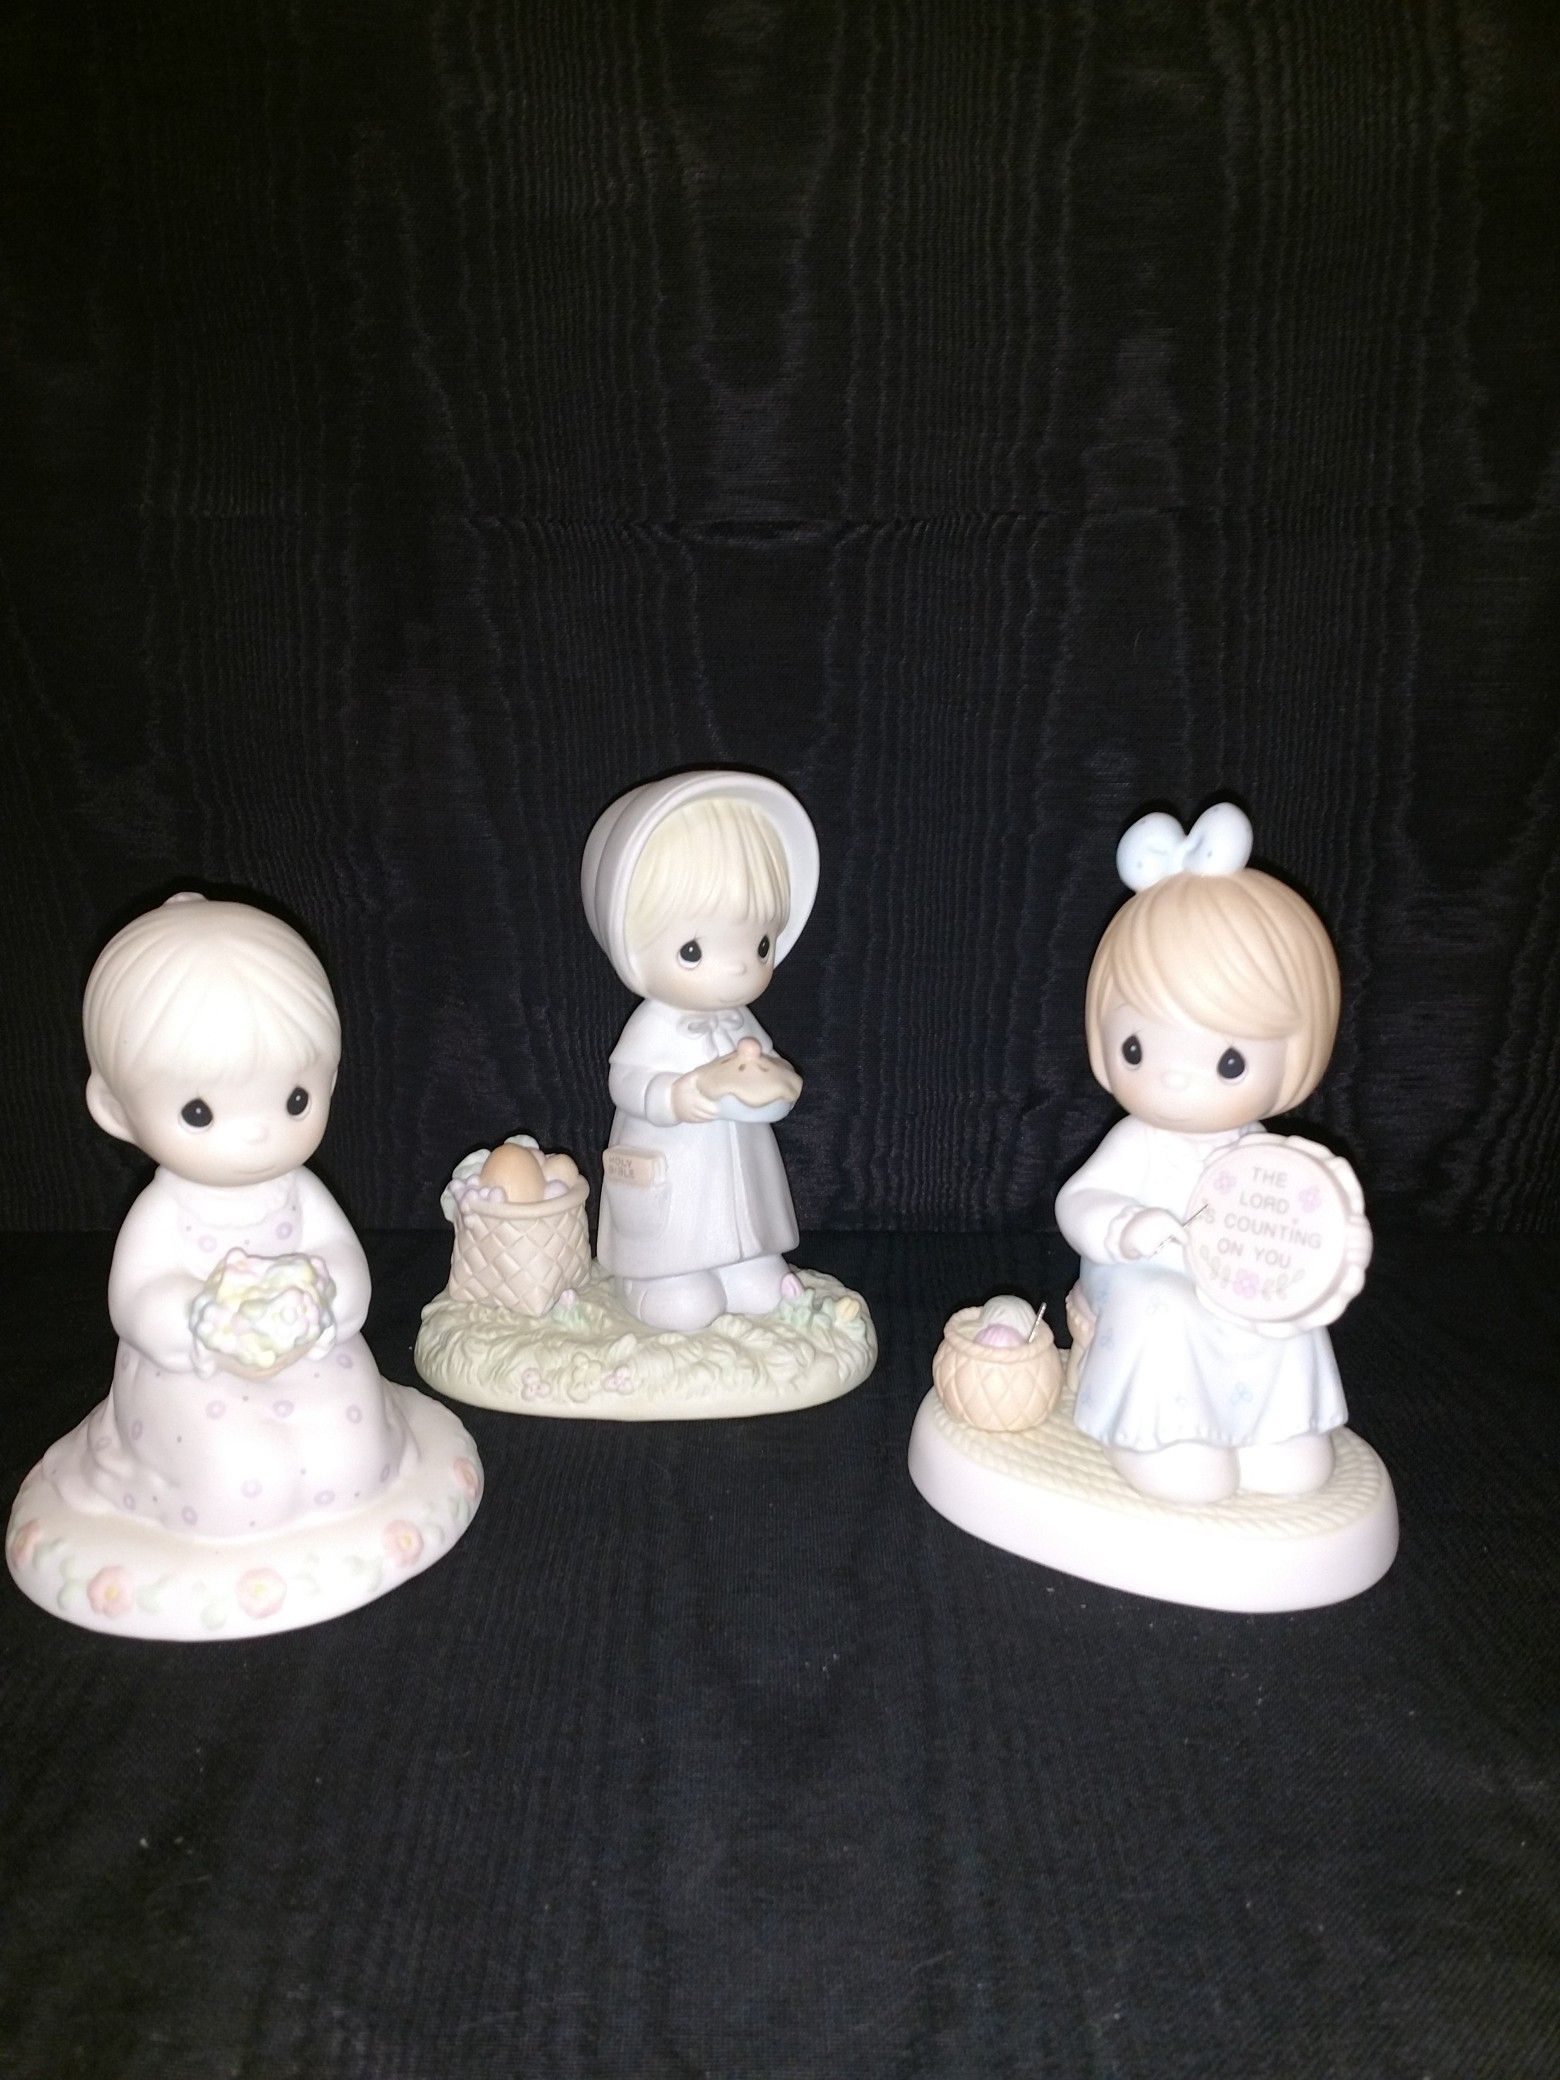 3 Precious Moment Figurines Mint Condition